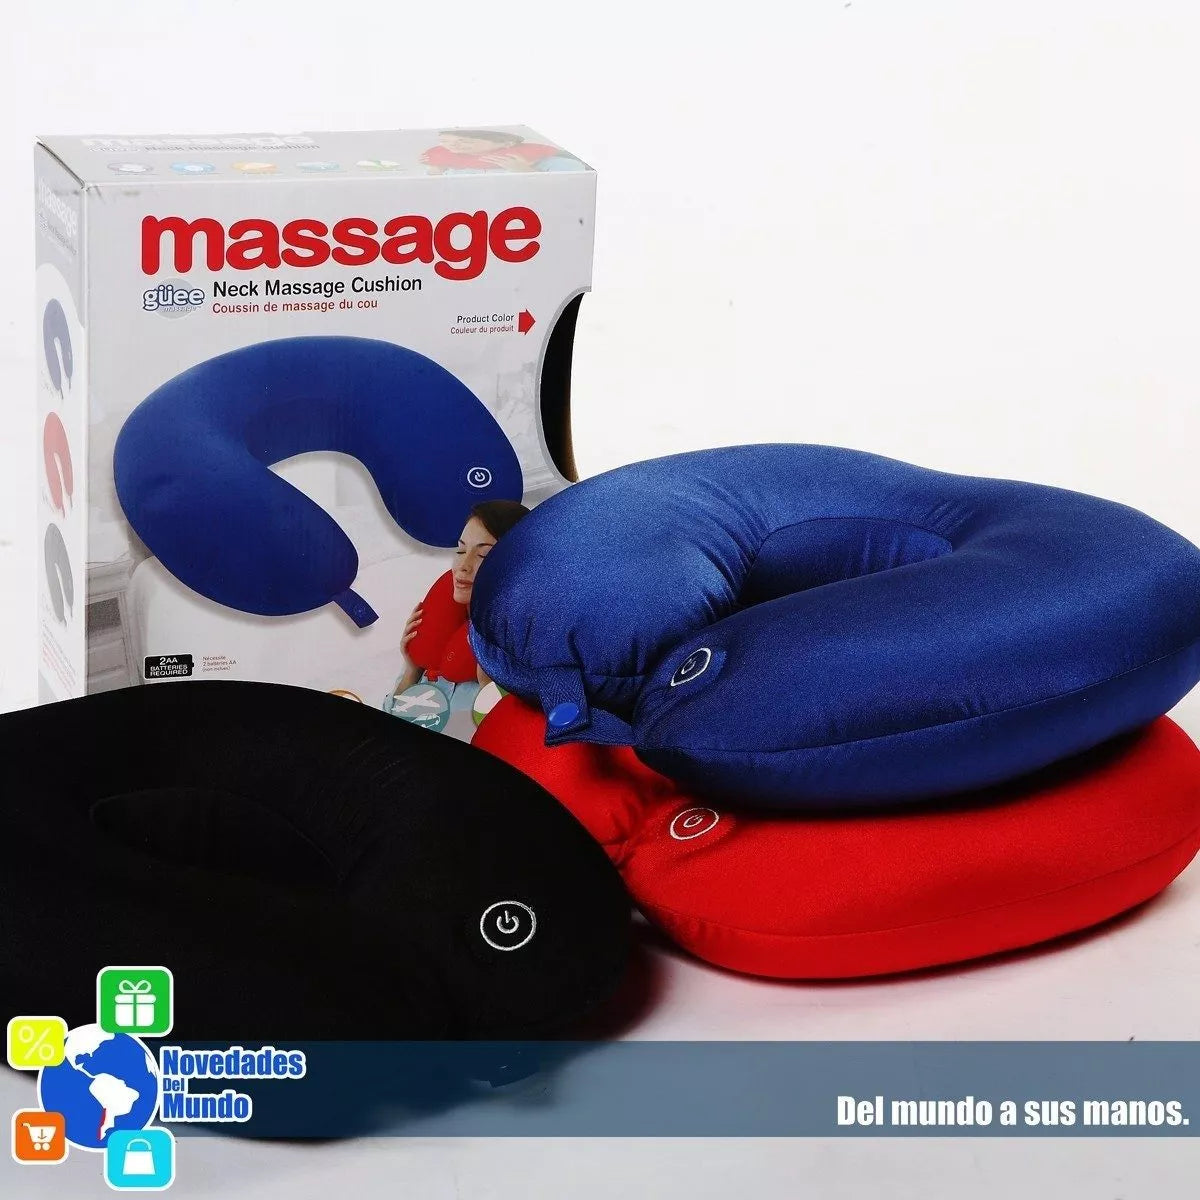 Massage neck massage cushion